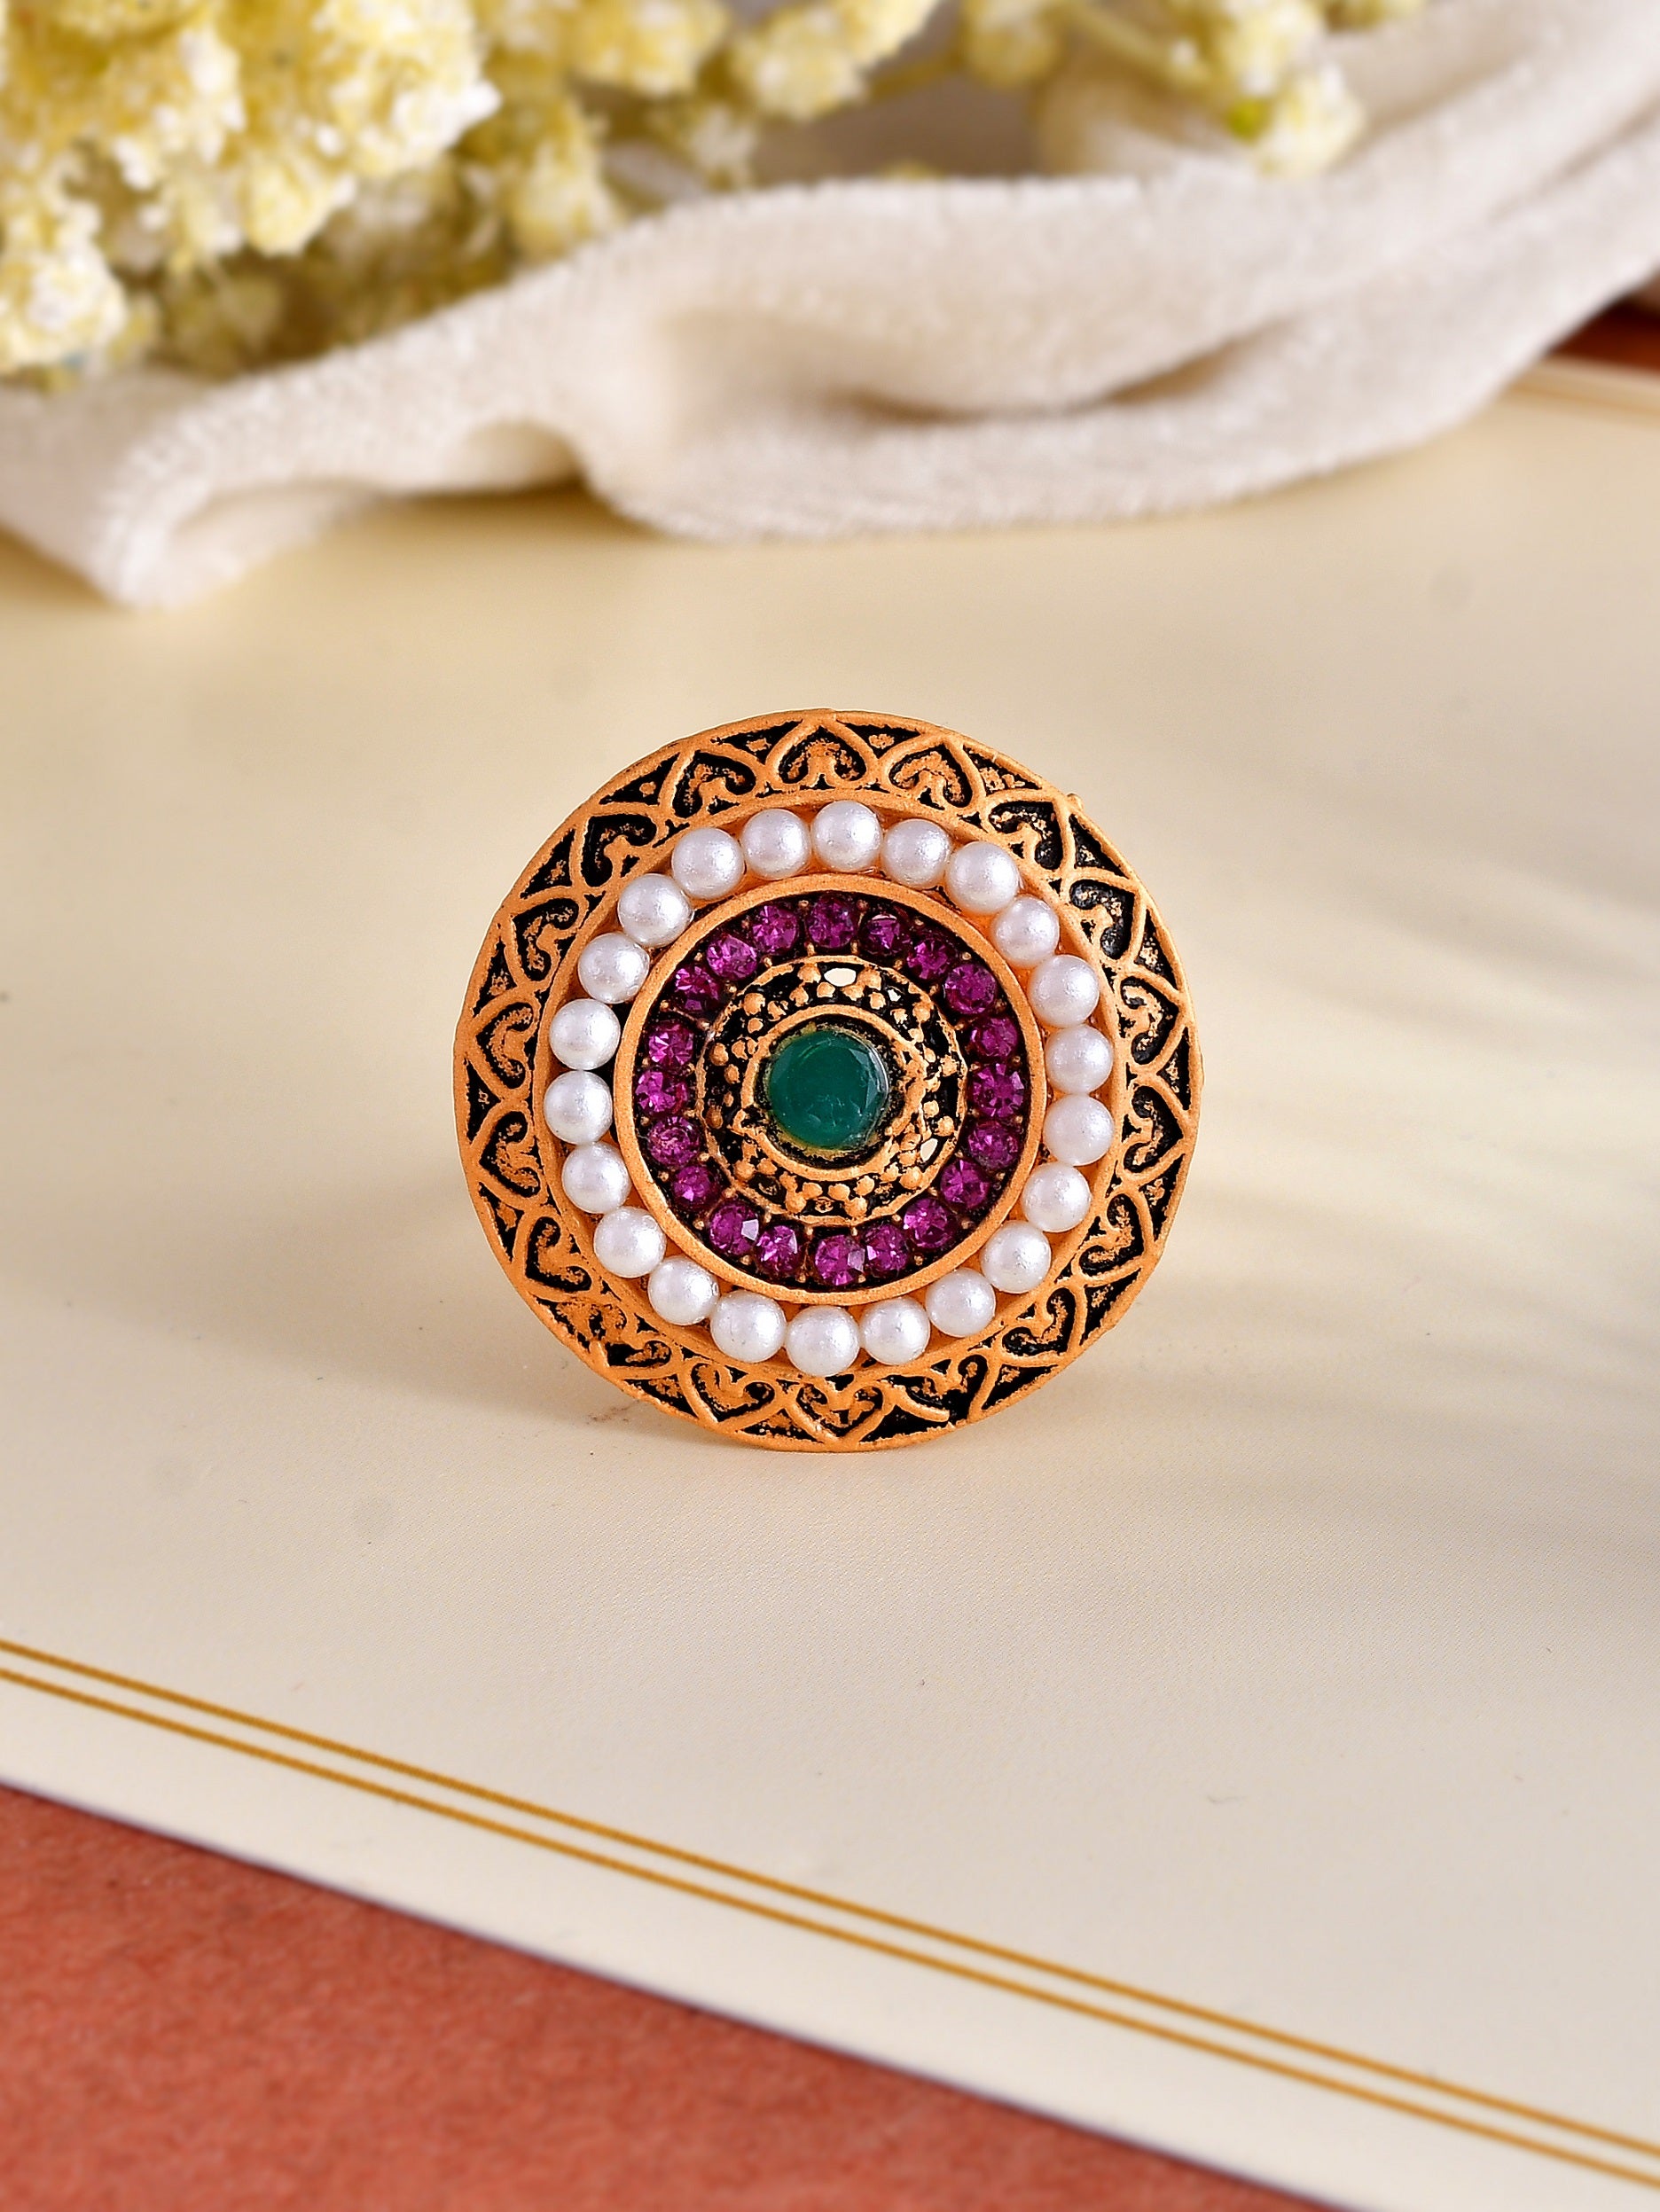 The Circular Jafri Gold Ring